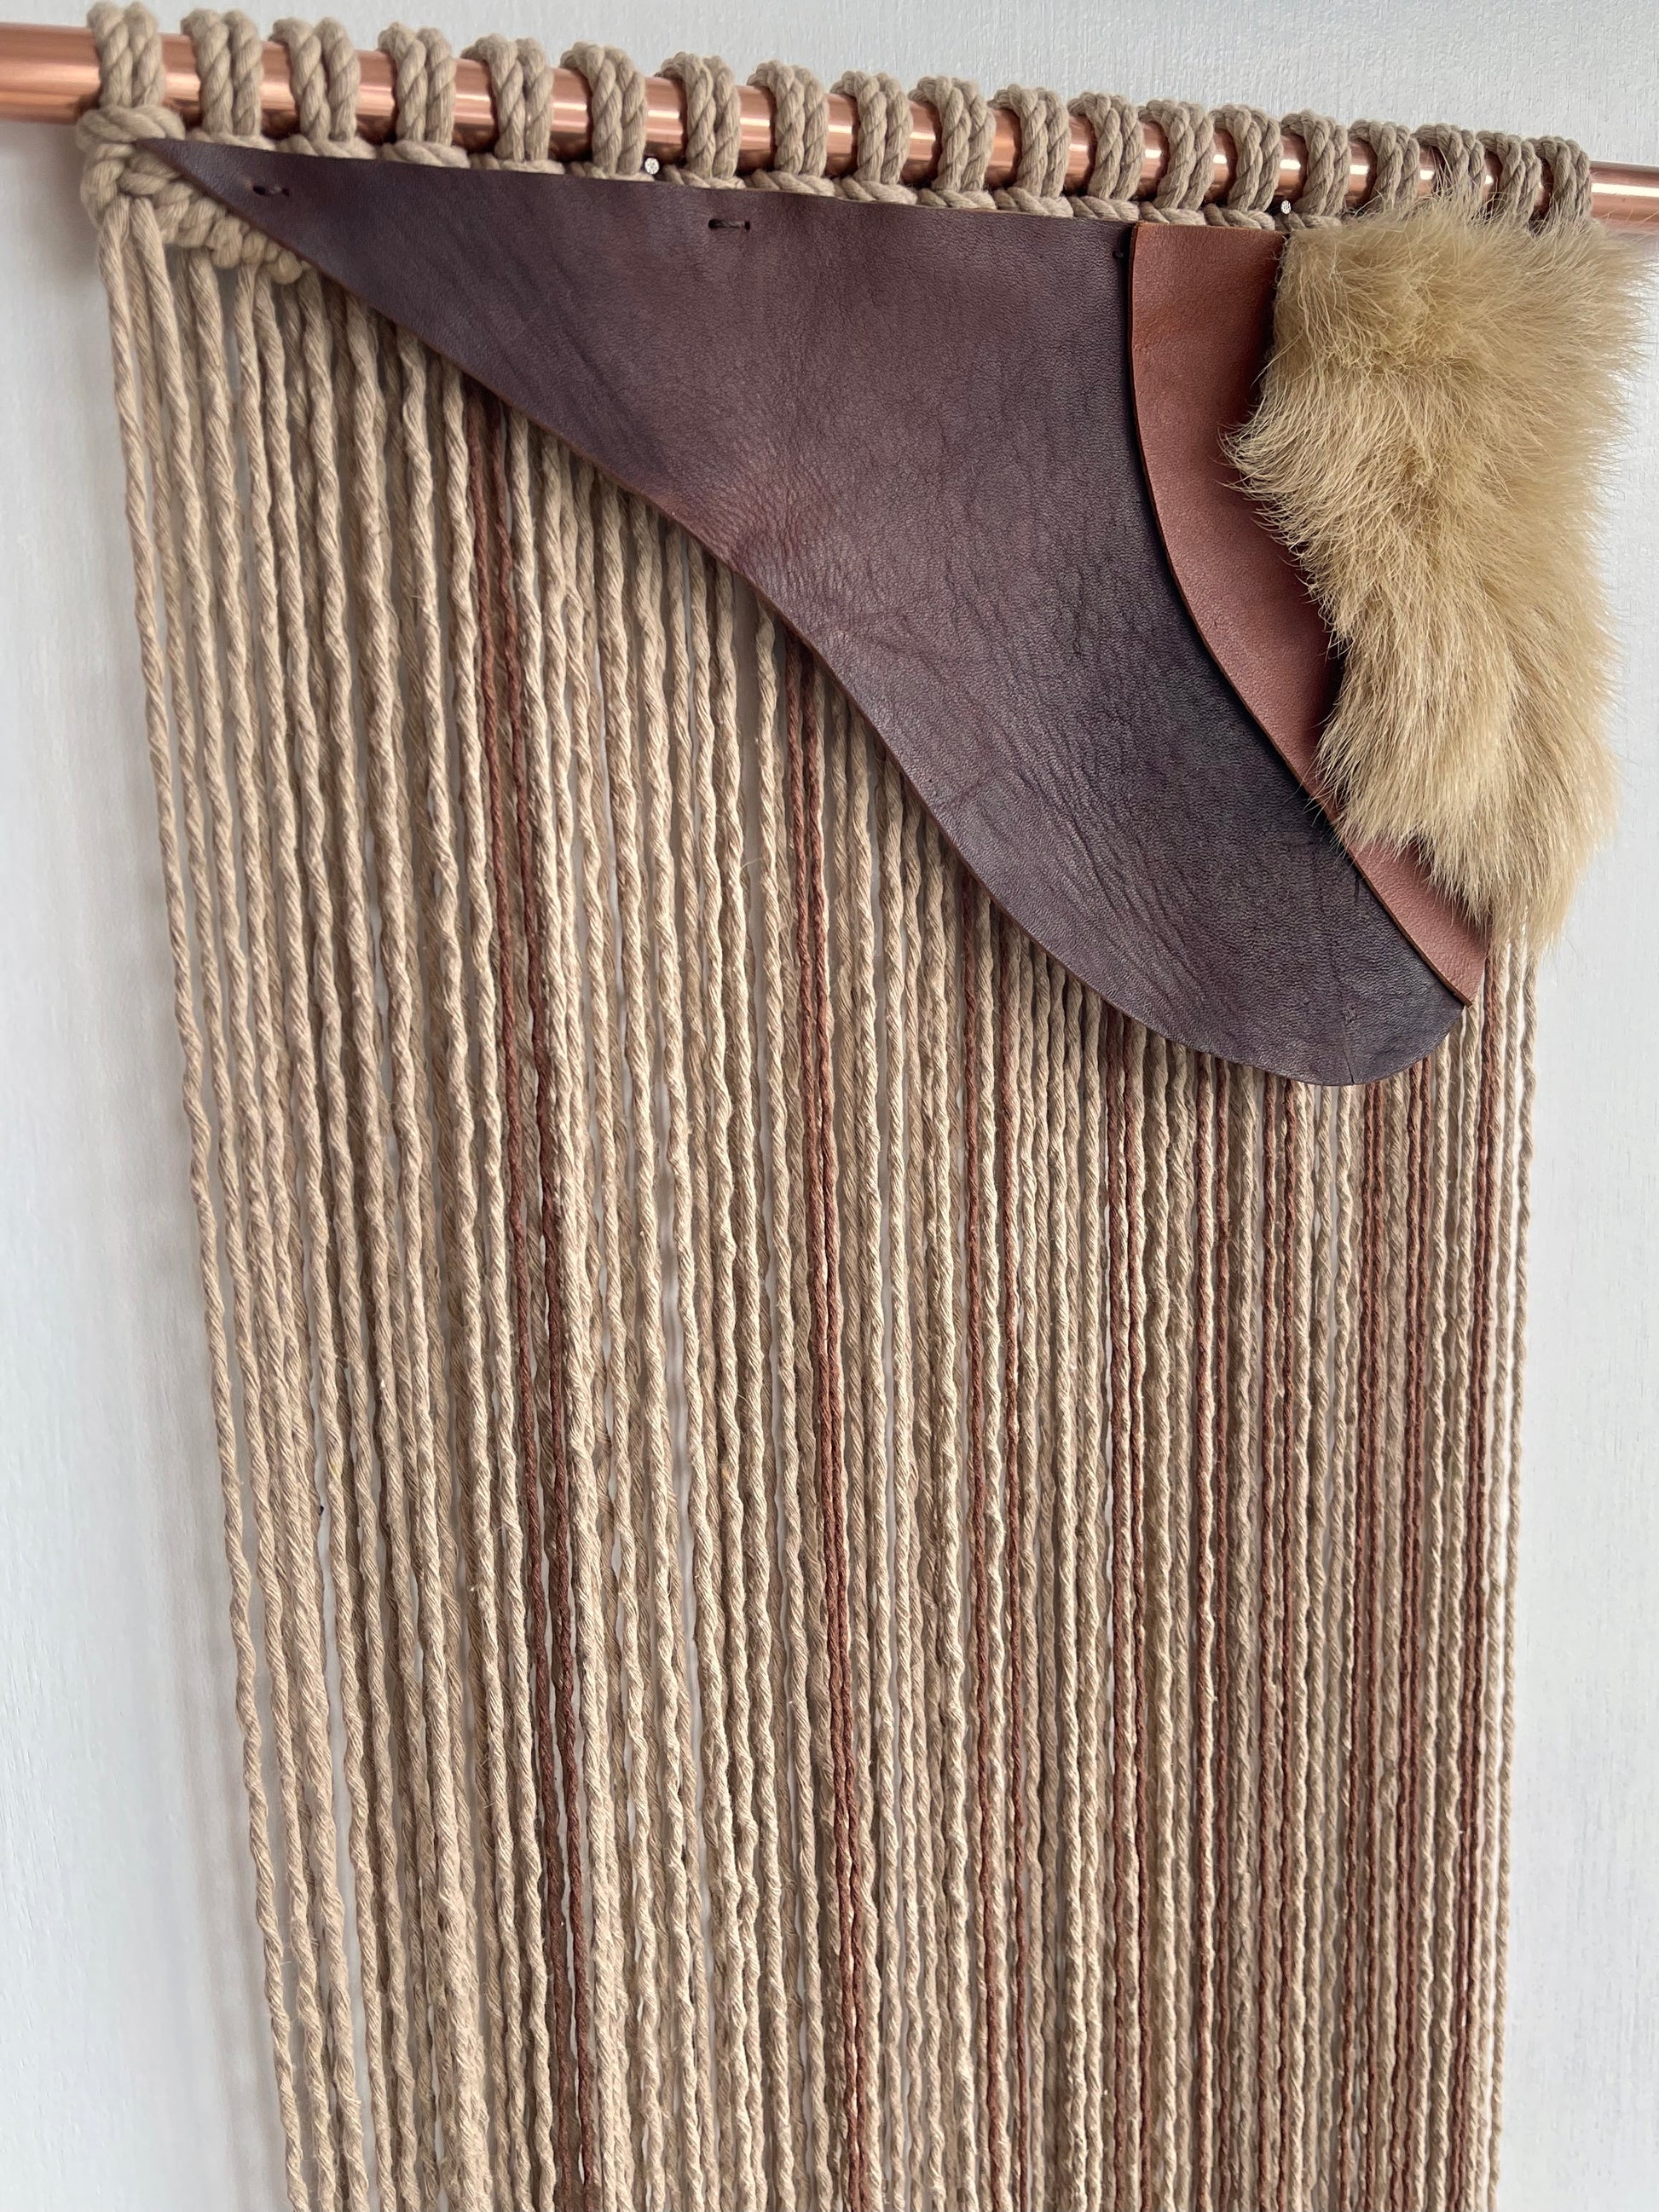 Handmade brown cotton cord leather sheepskin fibre art wall hanging